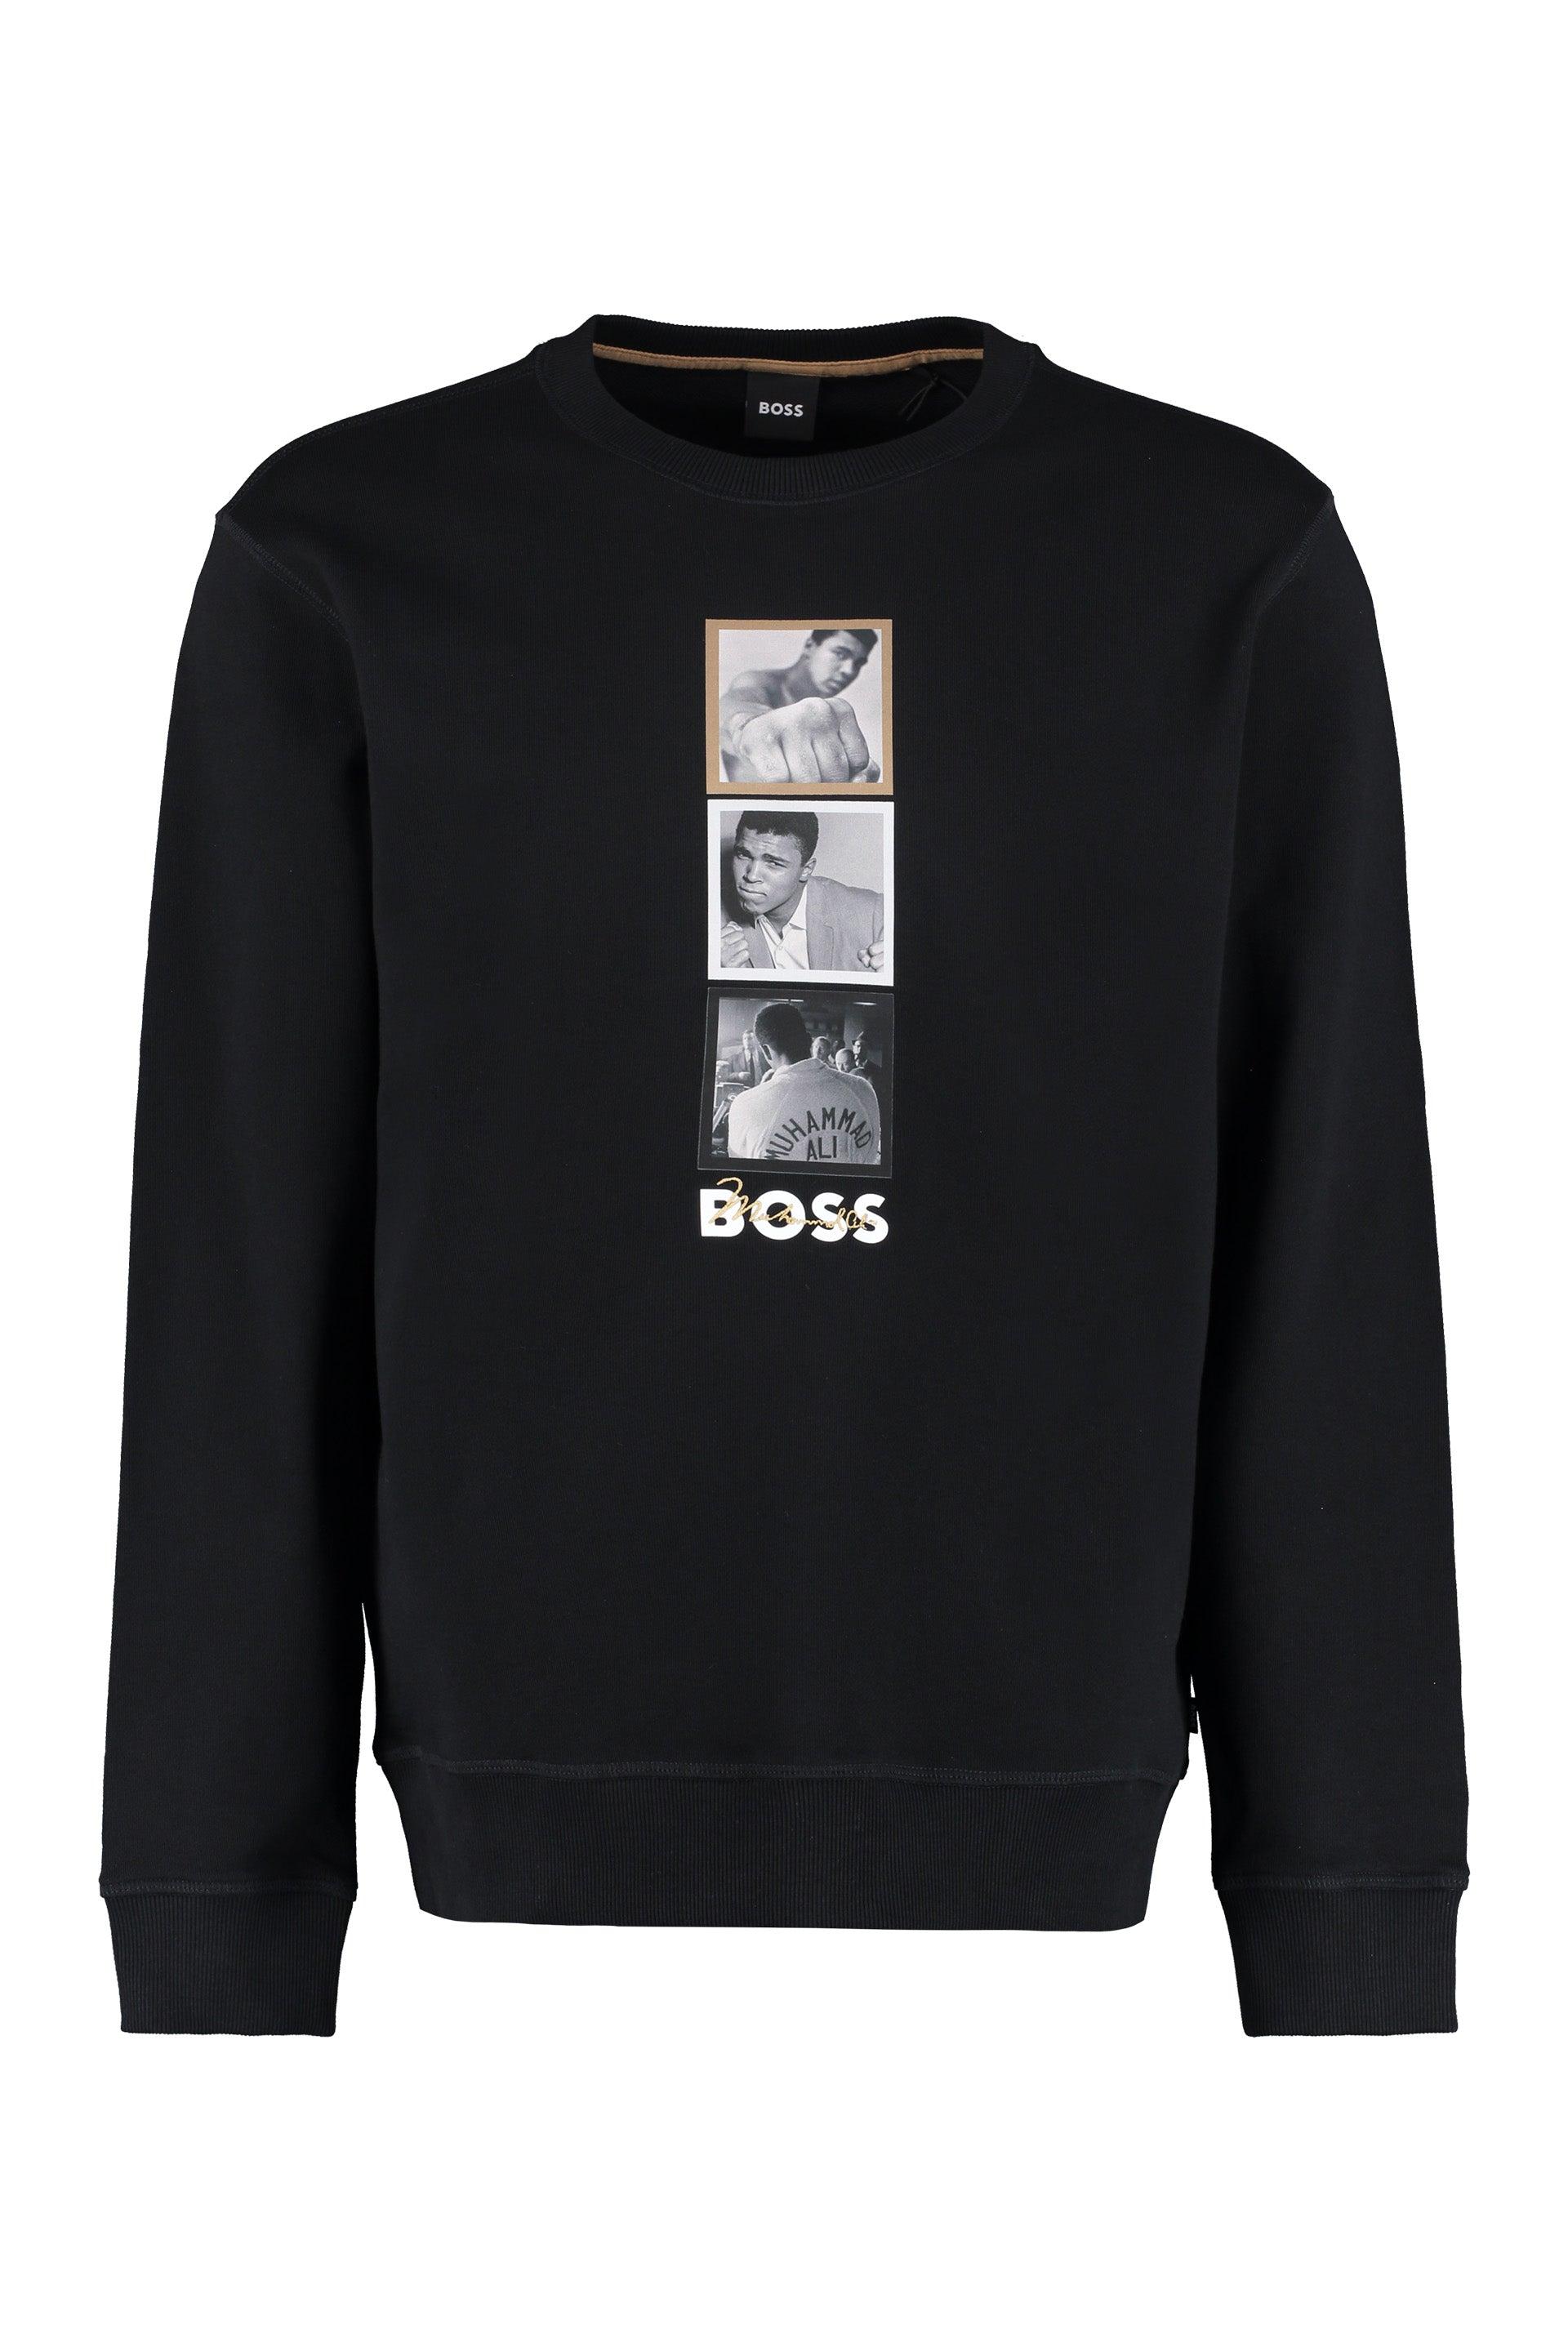 BOSS by HUGO BOSS X Muhammad Ali - Cotton Sweatshirt in Black for Lyst